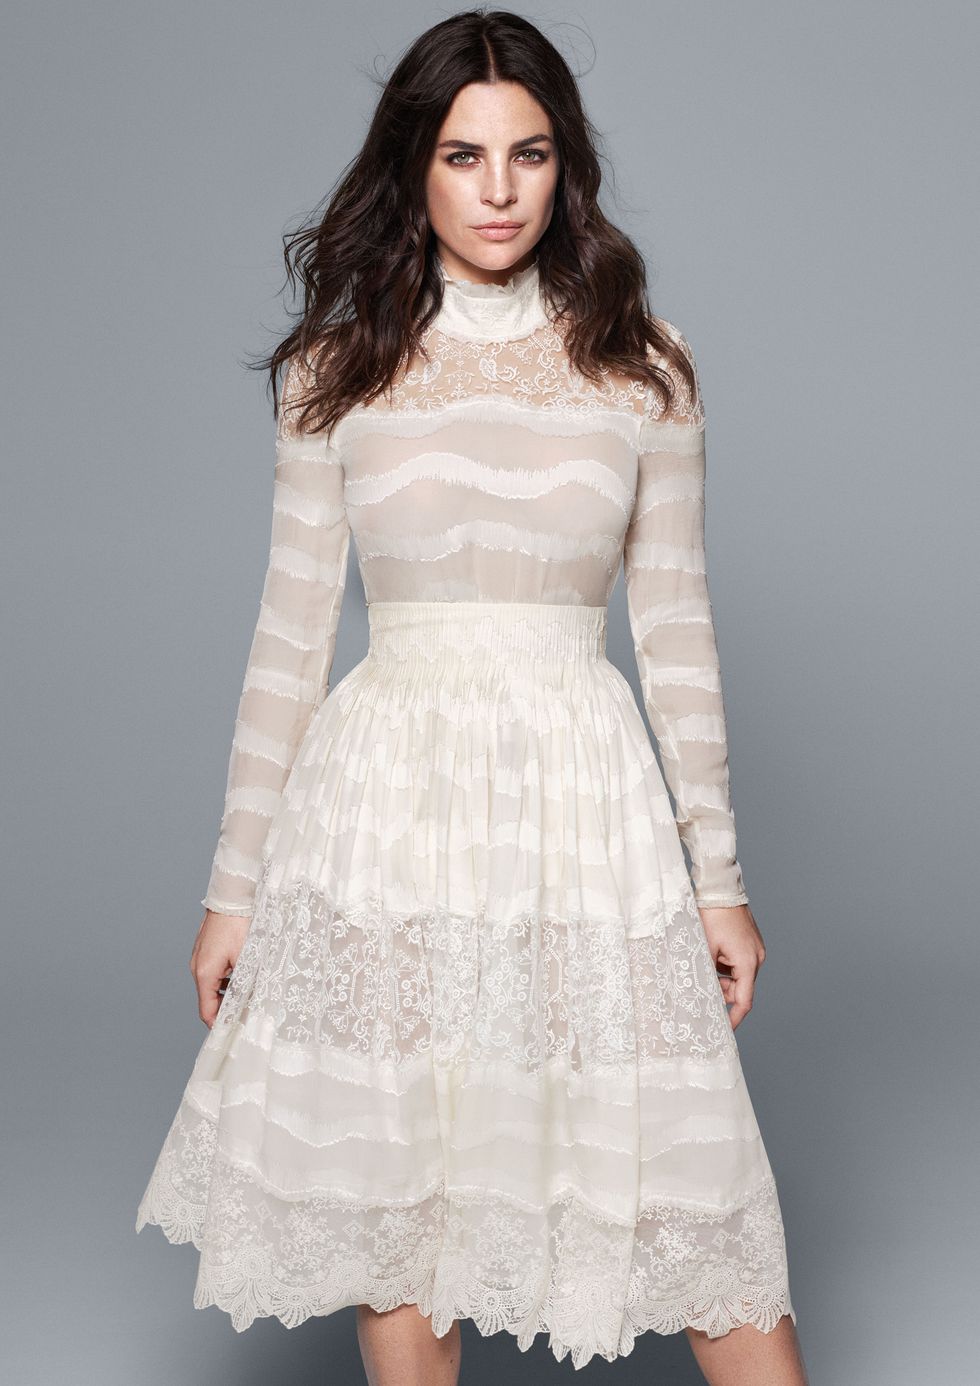 H&M Conscious wedding top and skirt